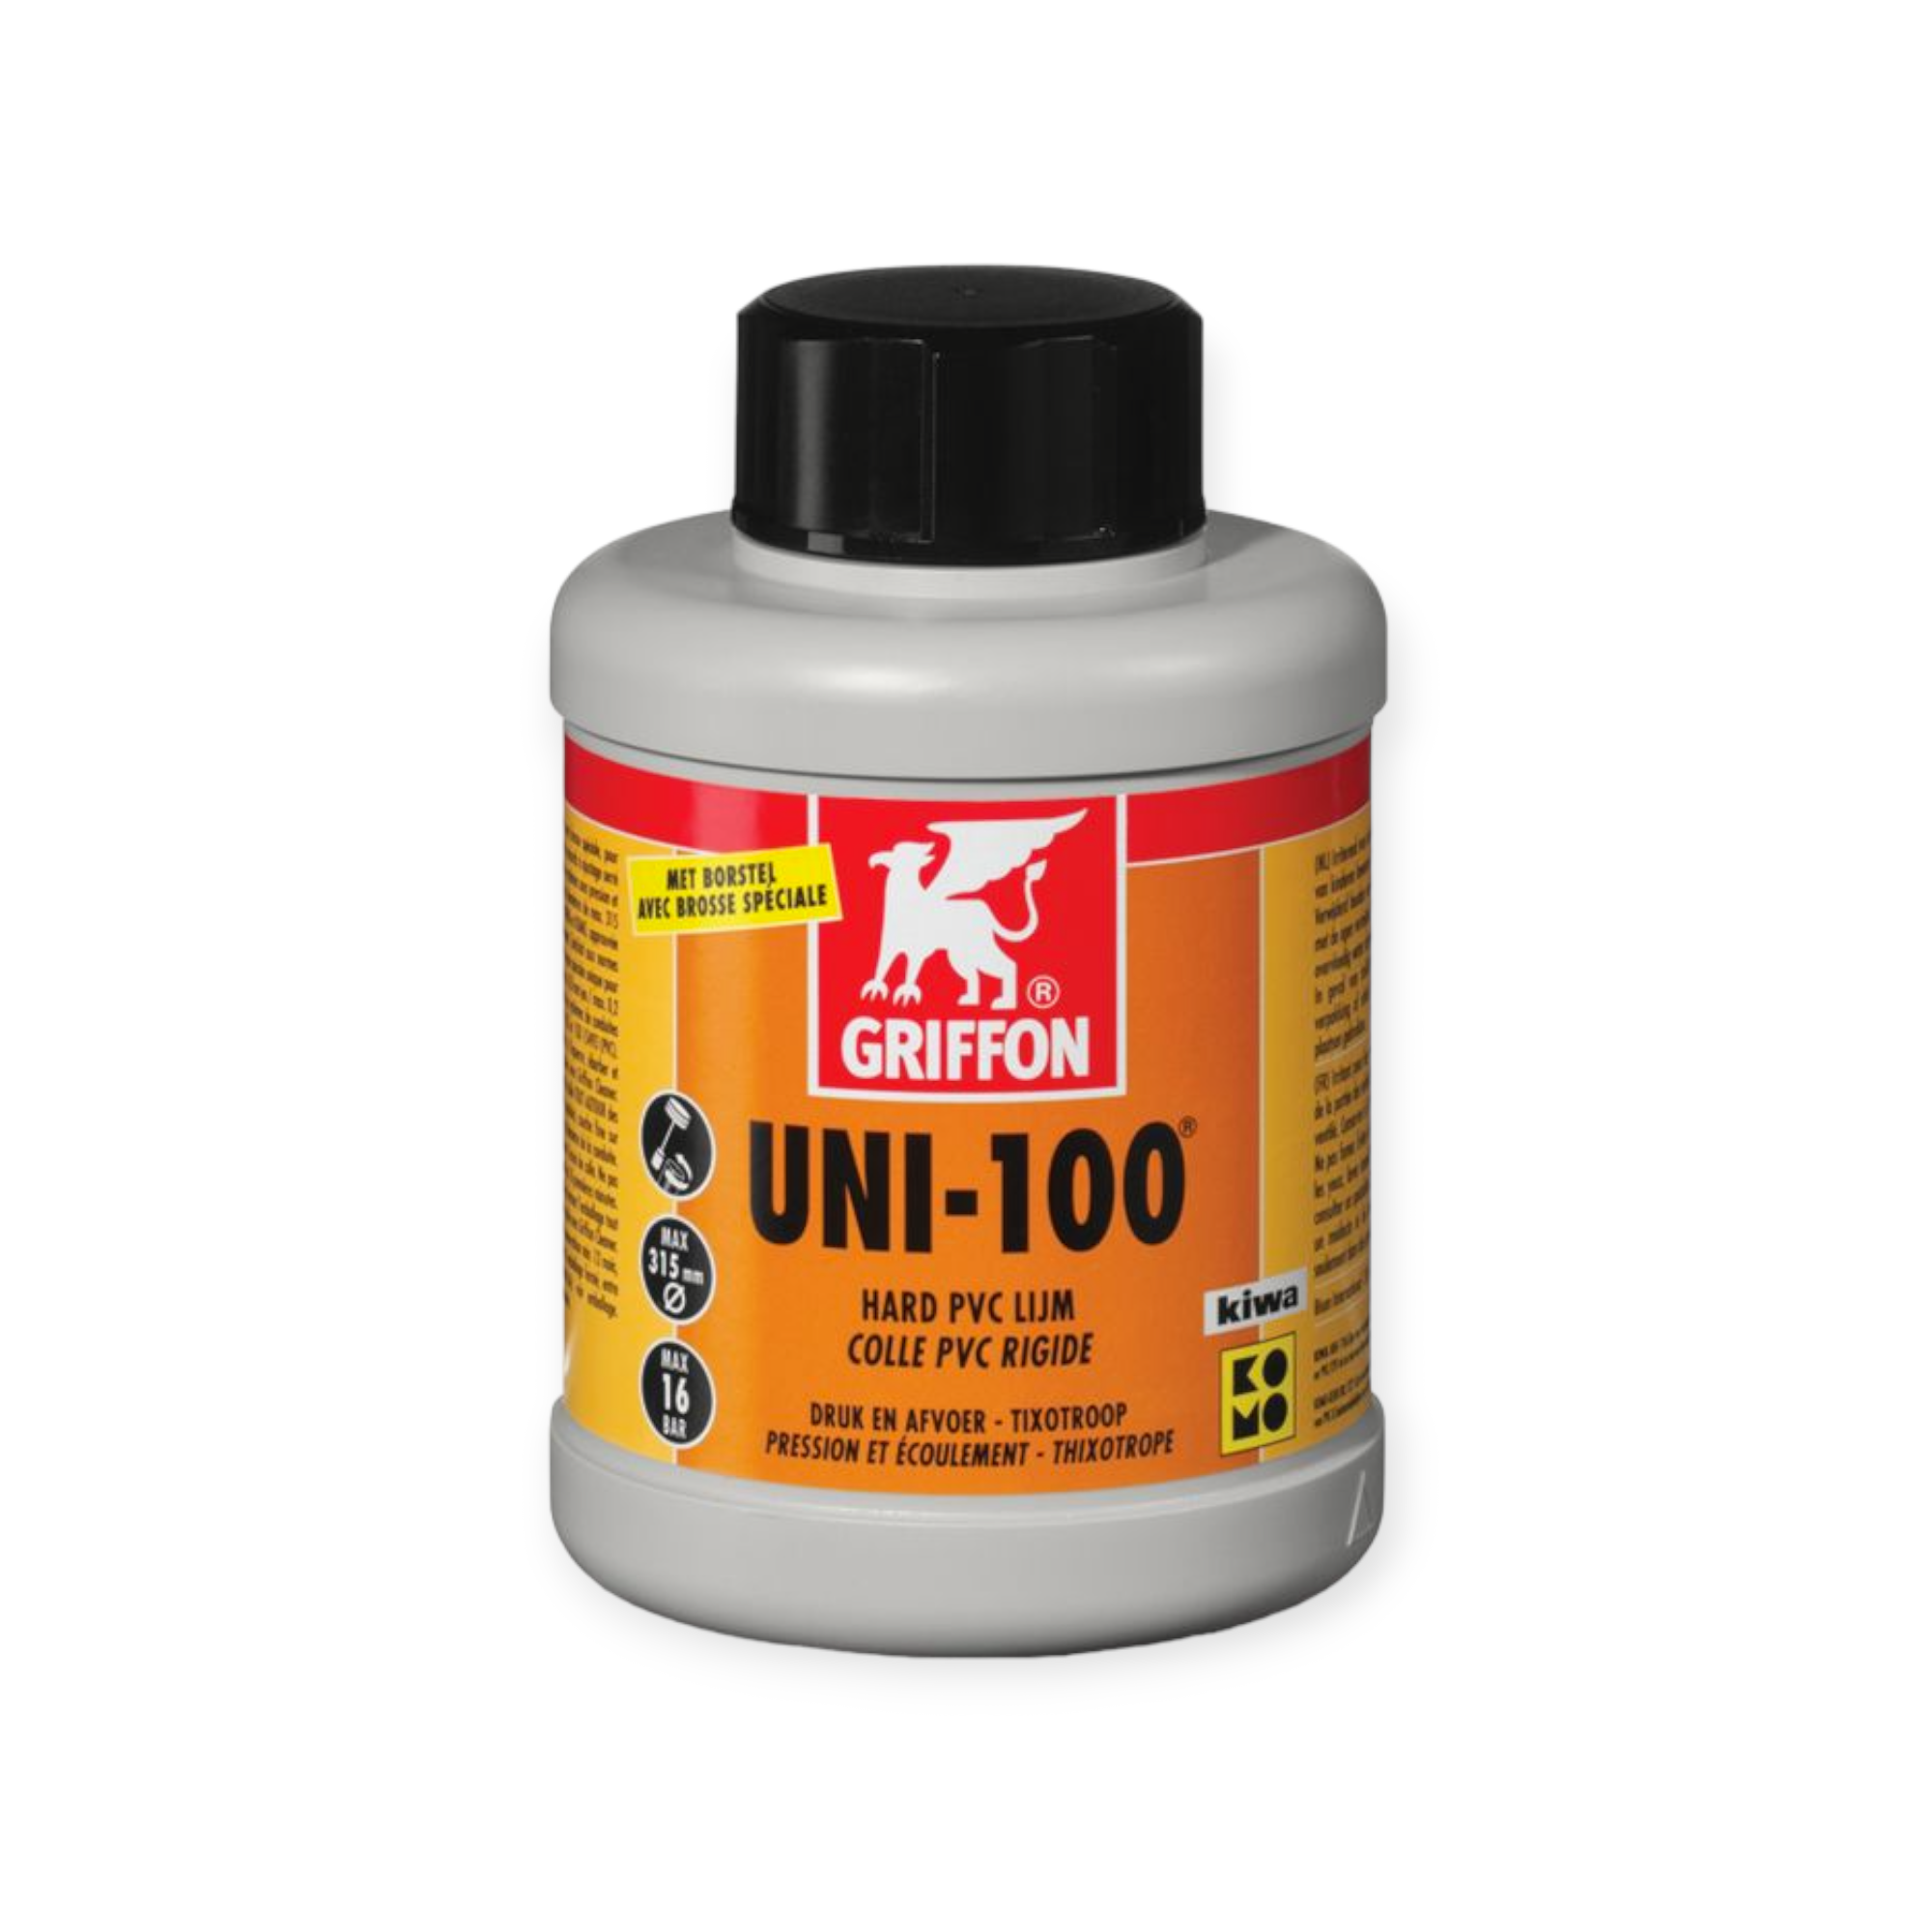 Griffon UNI-100 Thixotroper Klebstoff für Hart-PVC